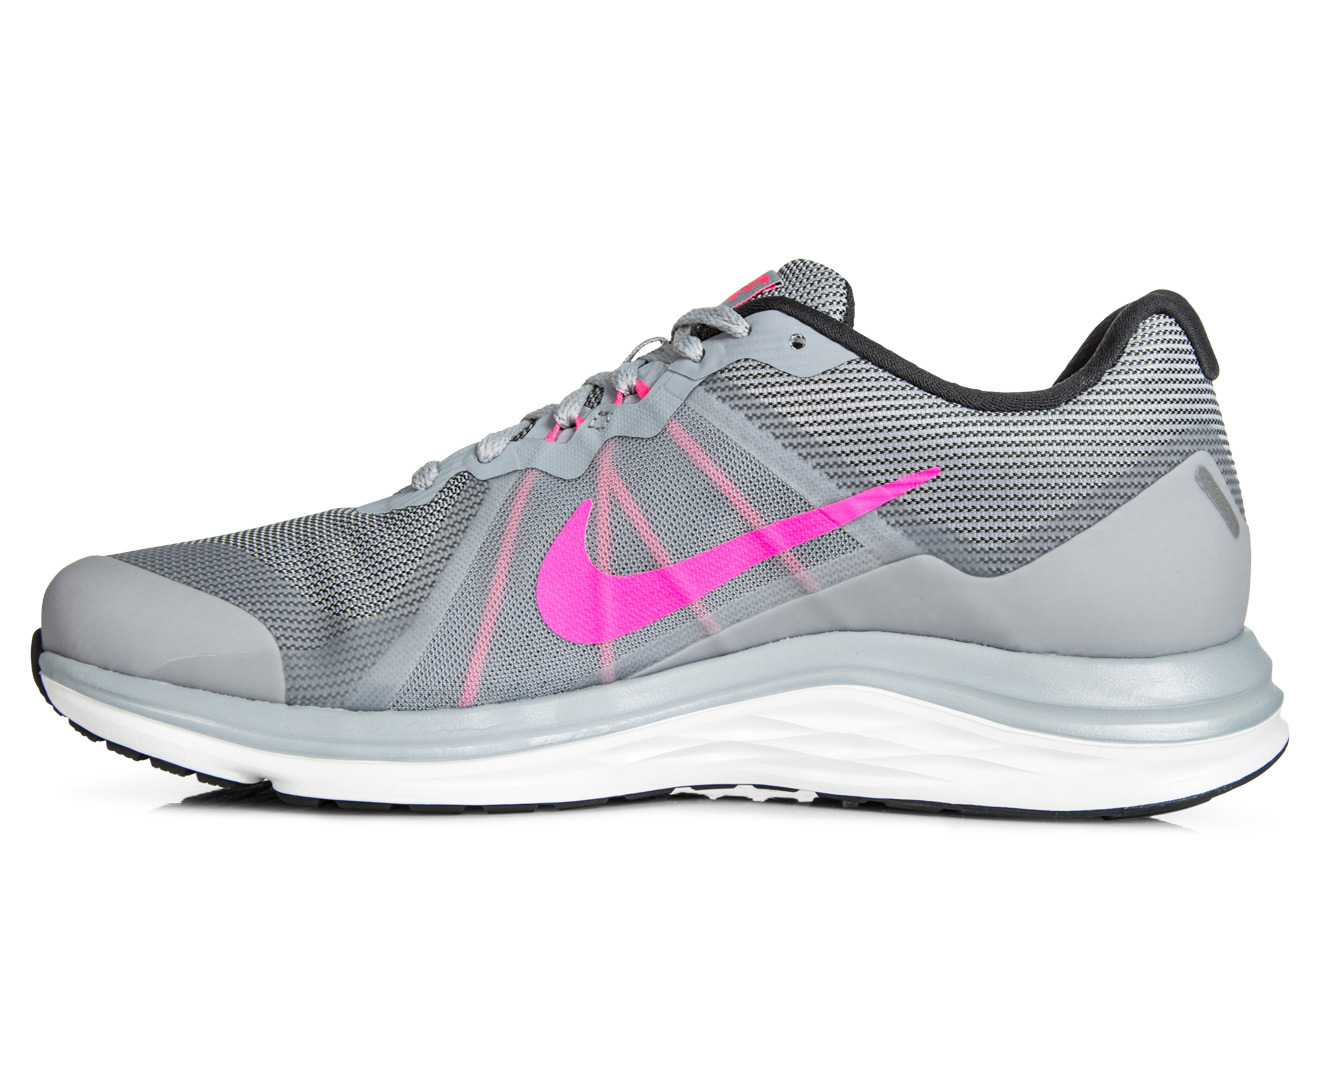 Nike Women's Dual Fusion X 2 Shoe Grey/Pink Blast/Anthracite/White | Www.catch.com.au